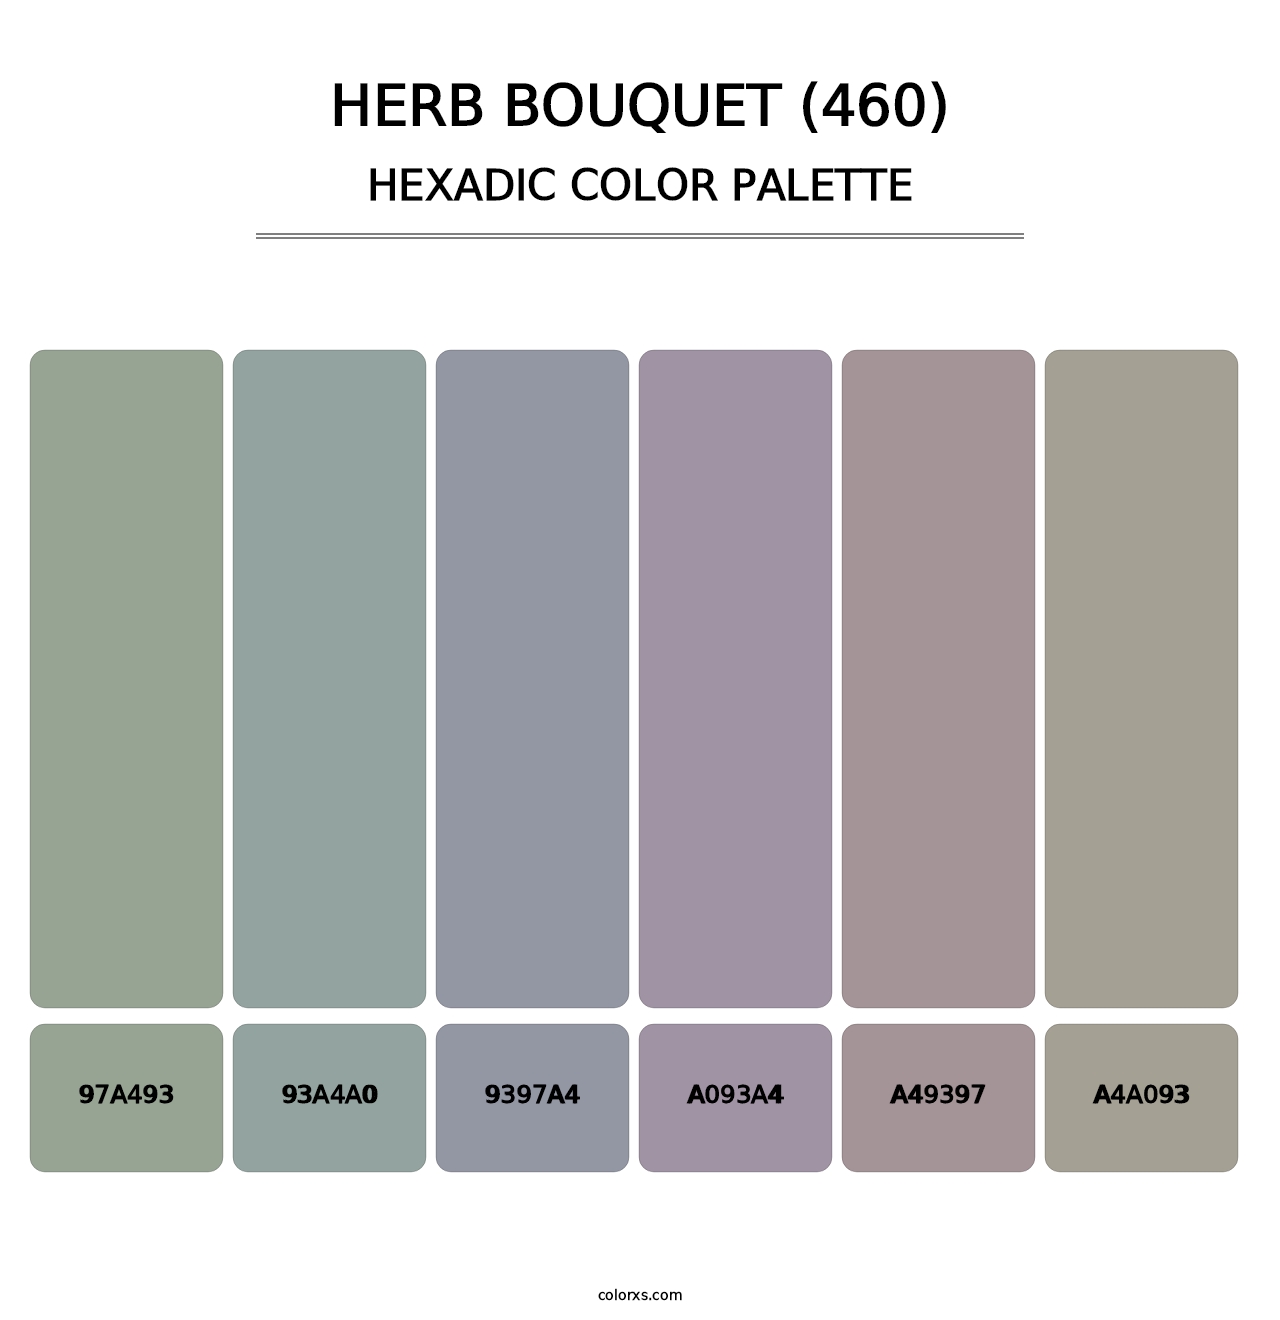 Herb Bouquet (460) - Hexadic Color Palette